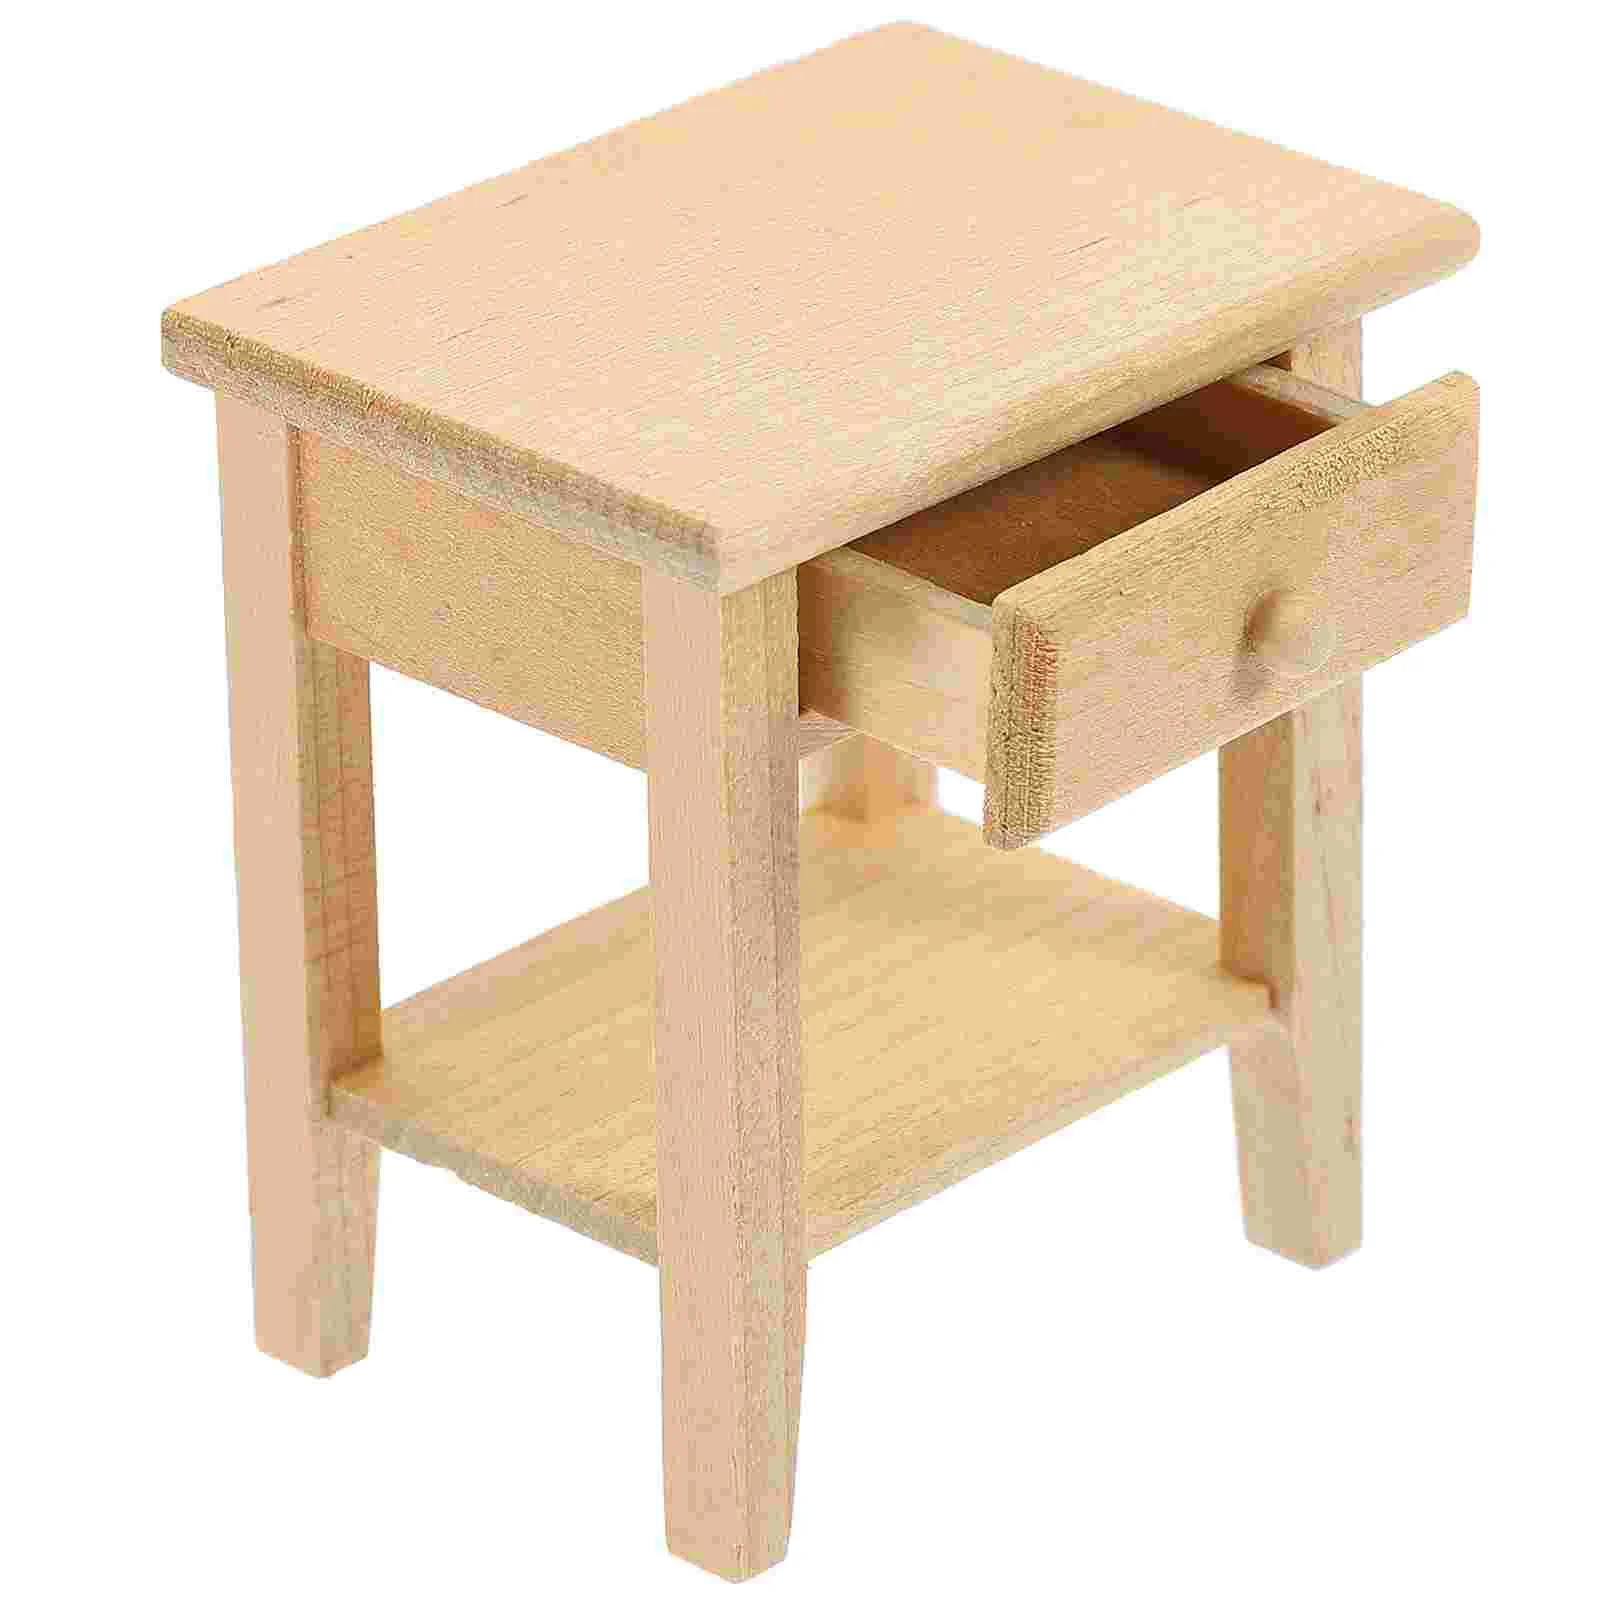 

House Decoration Mini Table Model Wooden Furniture Pocket Tiny Desk Miniature Toy